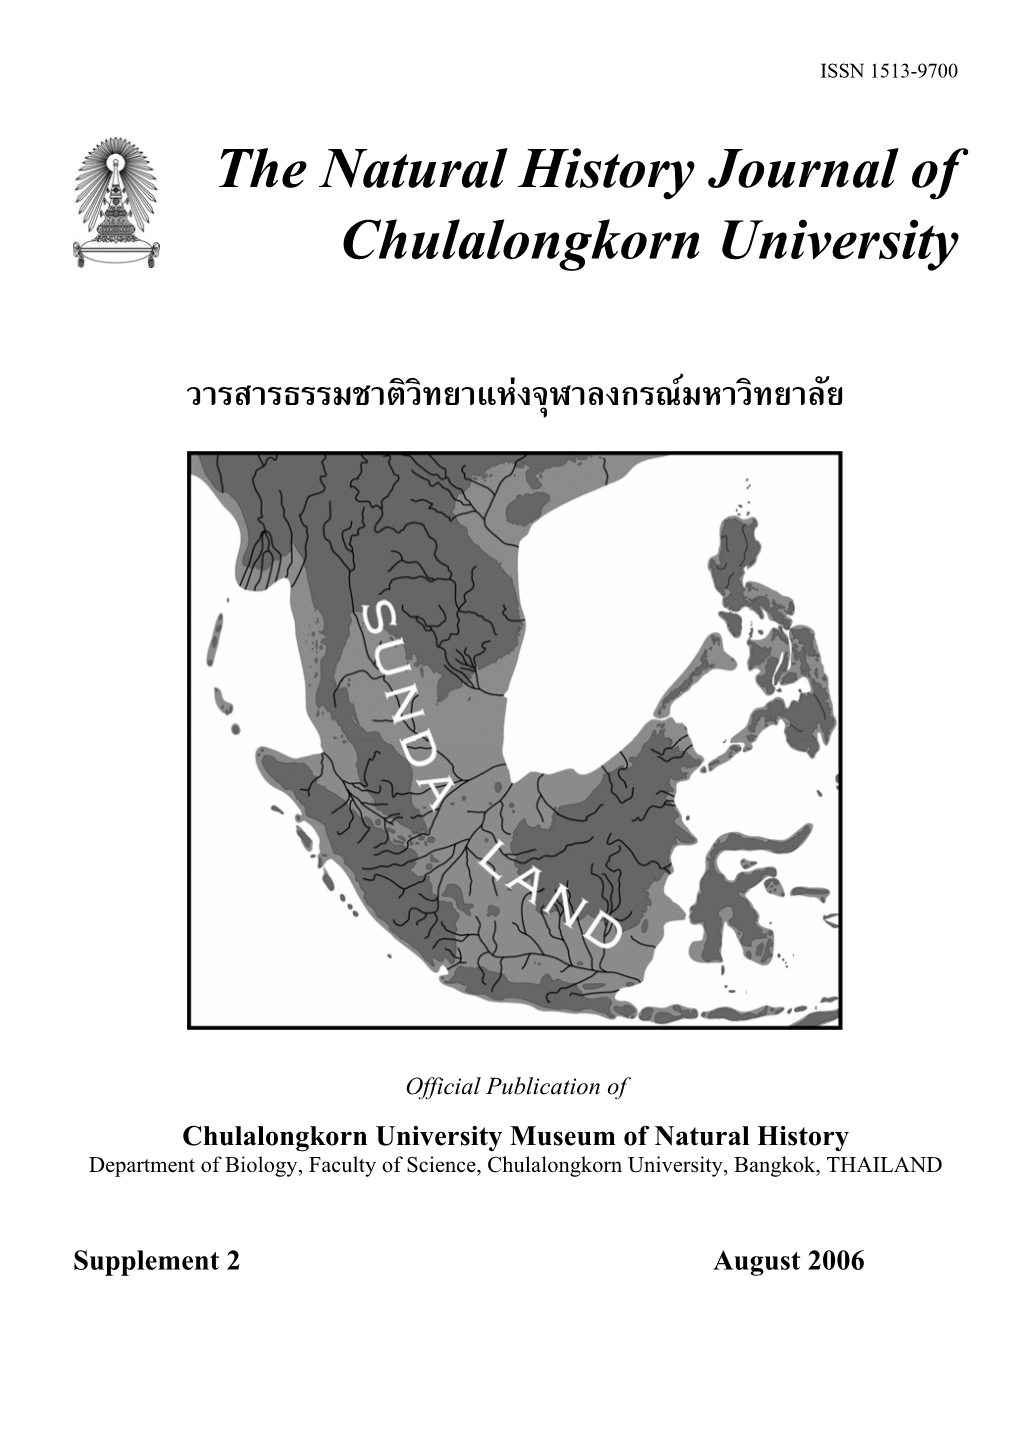 The Natural History Journal of Chulalongkorn University